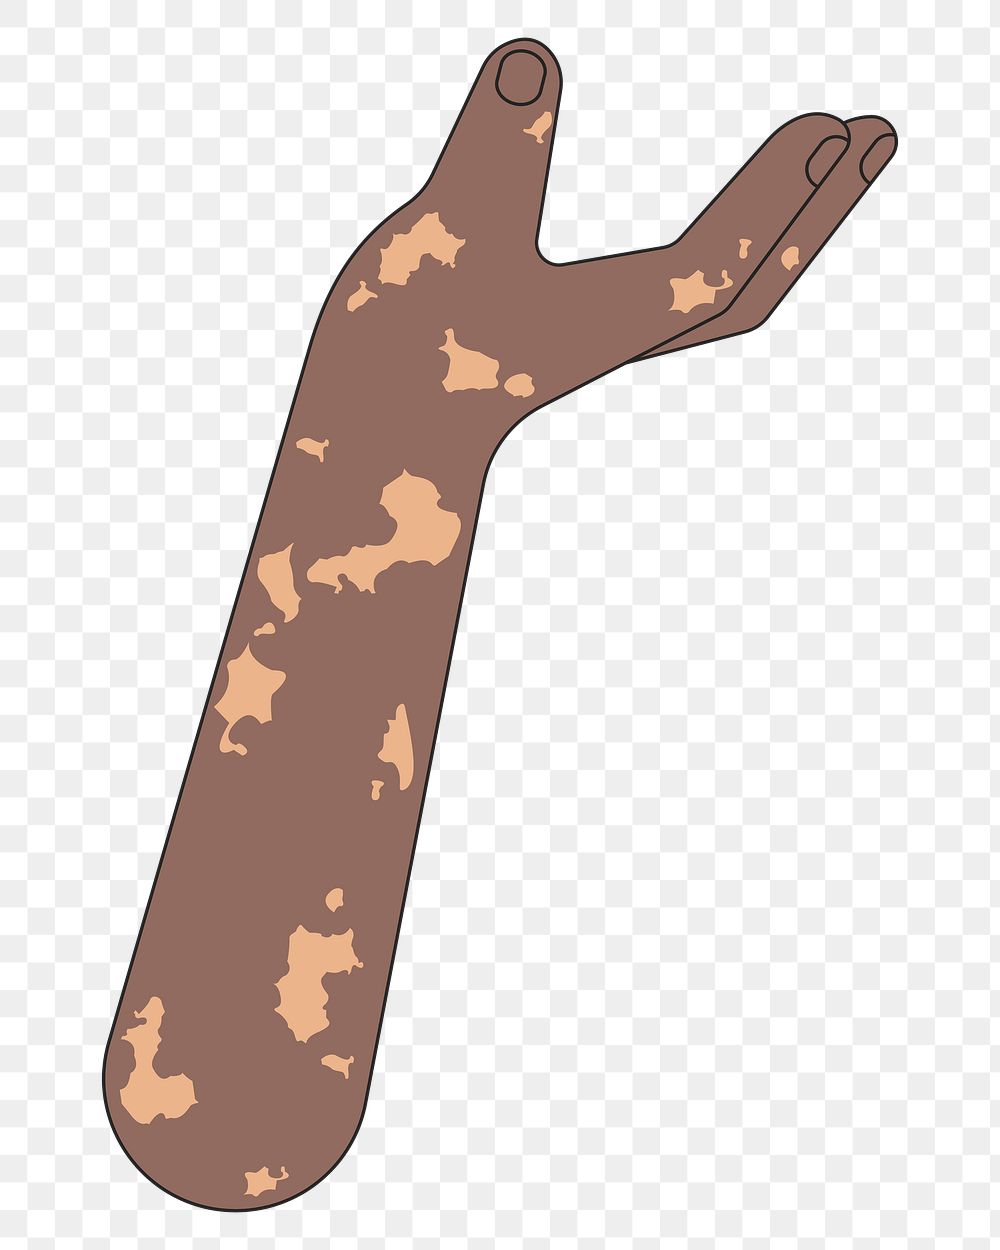 PNG Vitiligo presenting hand, gesture flat illustration, transparent background